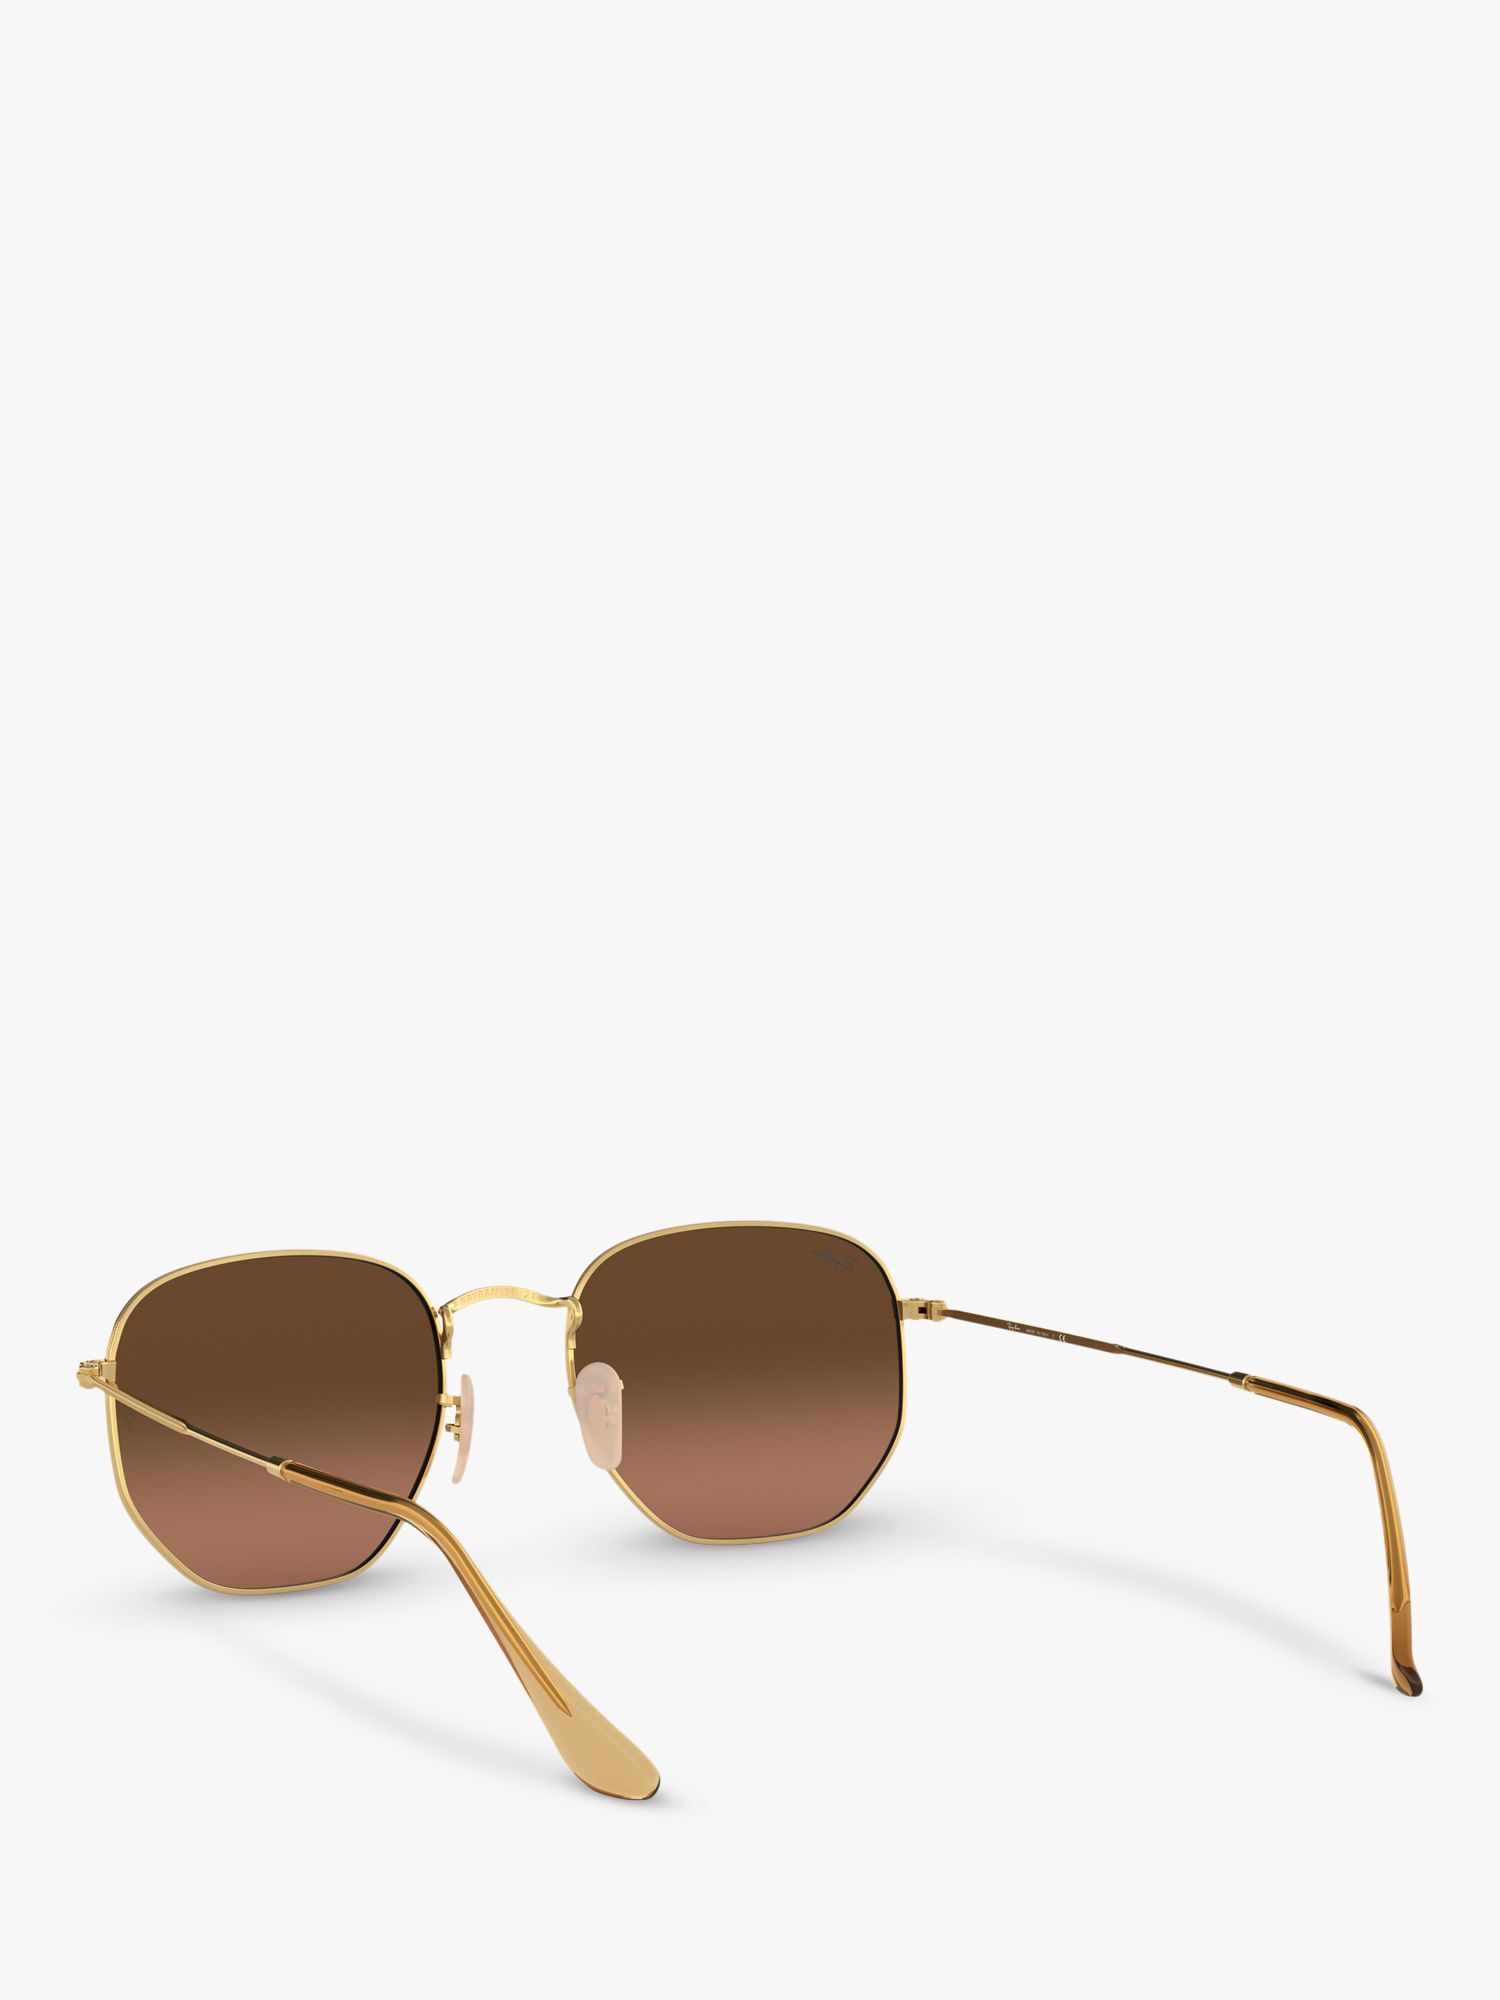 Buy Ray-Ban RB3548N Unisex Hexagonal Sunglasses, Gold/Brown Gradient Online at johnlewis.com